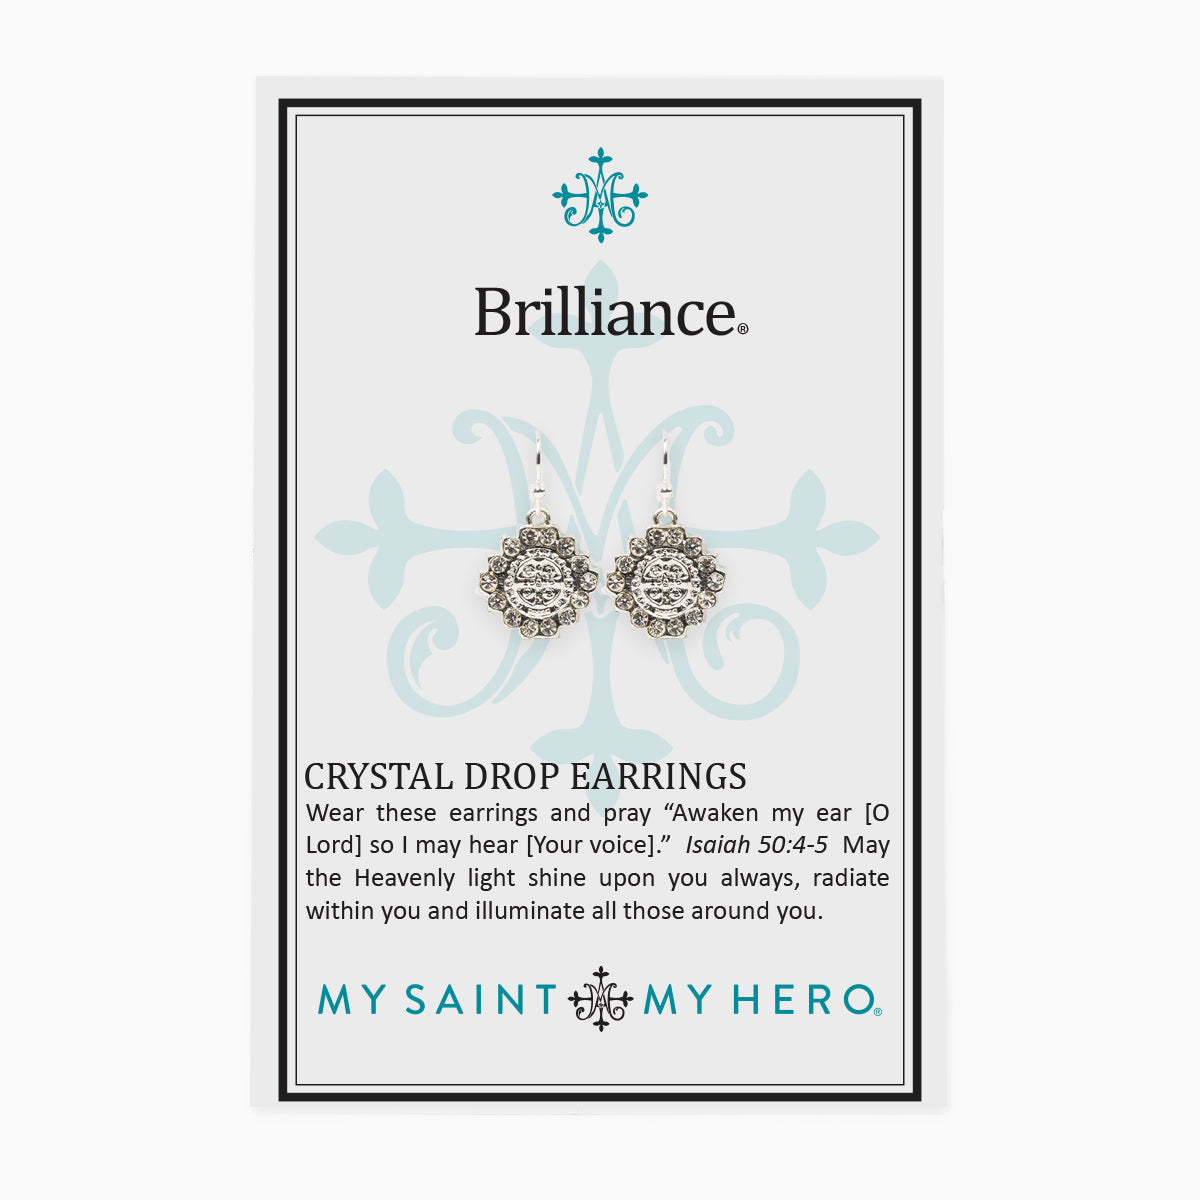 Brilliance Crystal Drop Earrings by My Saint My Hero